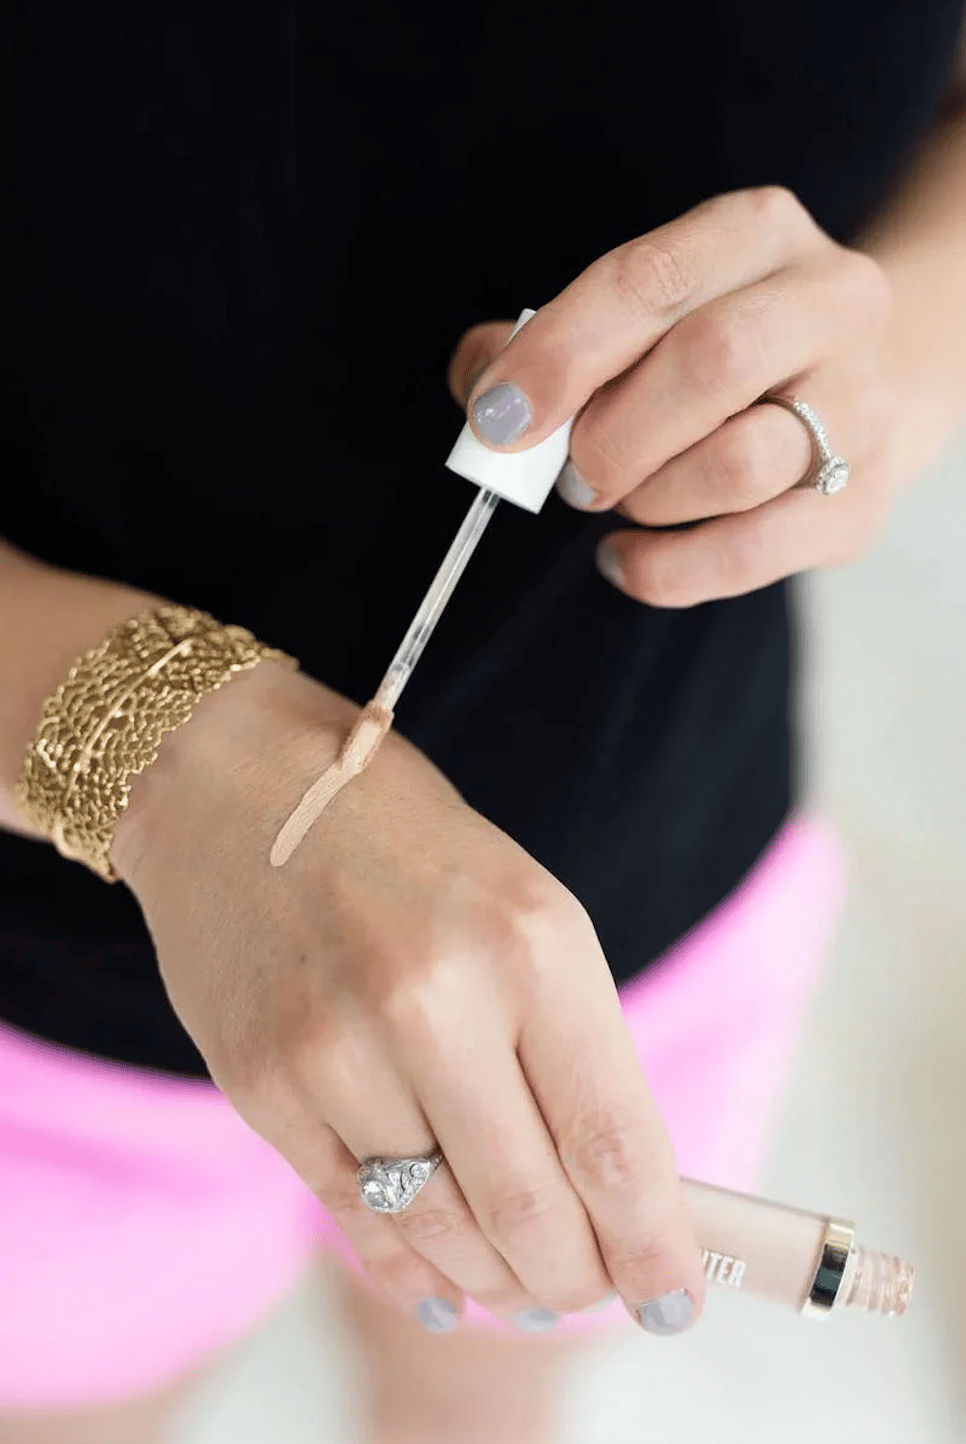 beautycounter concealer wand on hand | Everyday Beautycounter Makeup